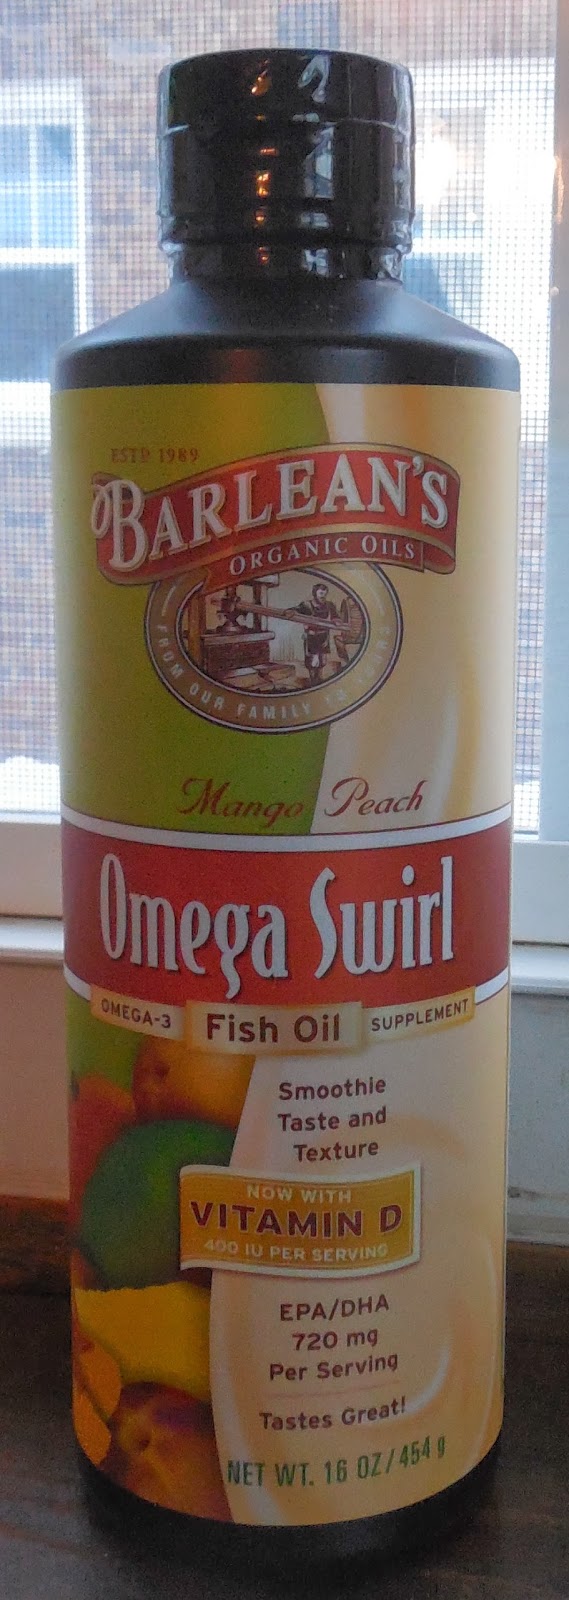 Barlean's Omega Swirl